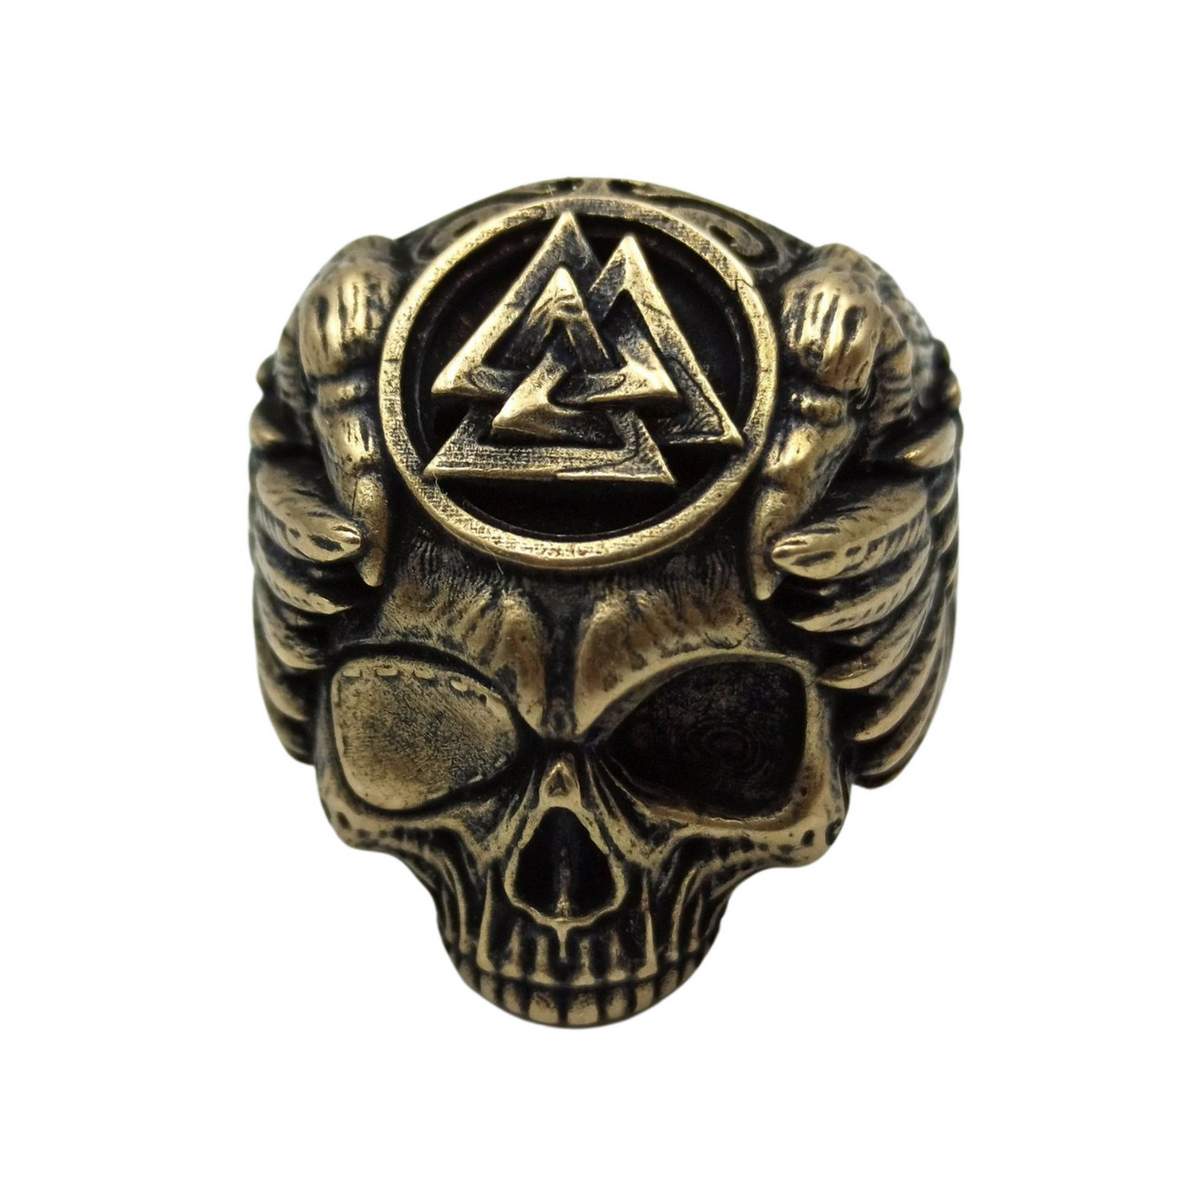 Odin skull bronze ring 6 US Bronze with patina 